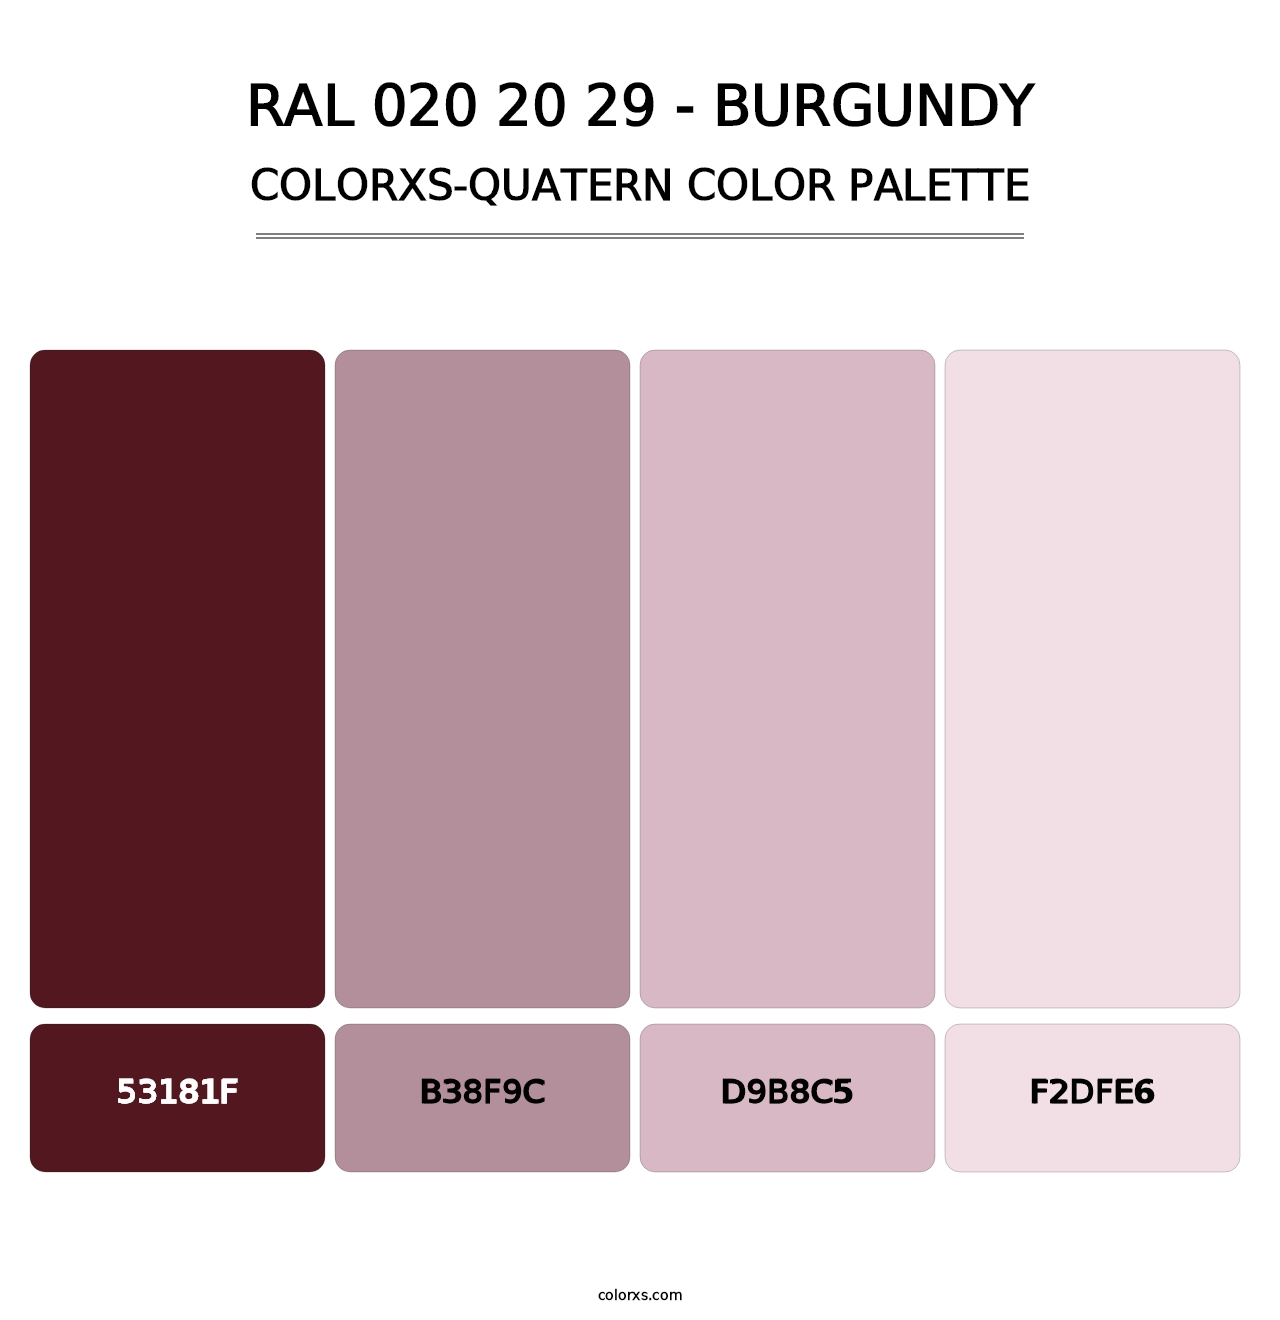 RAL 020 20 29 - Burgundy - Colorxs Quatern Palette